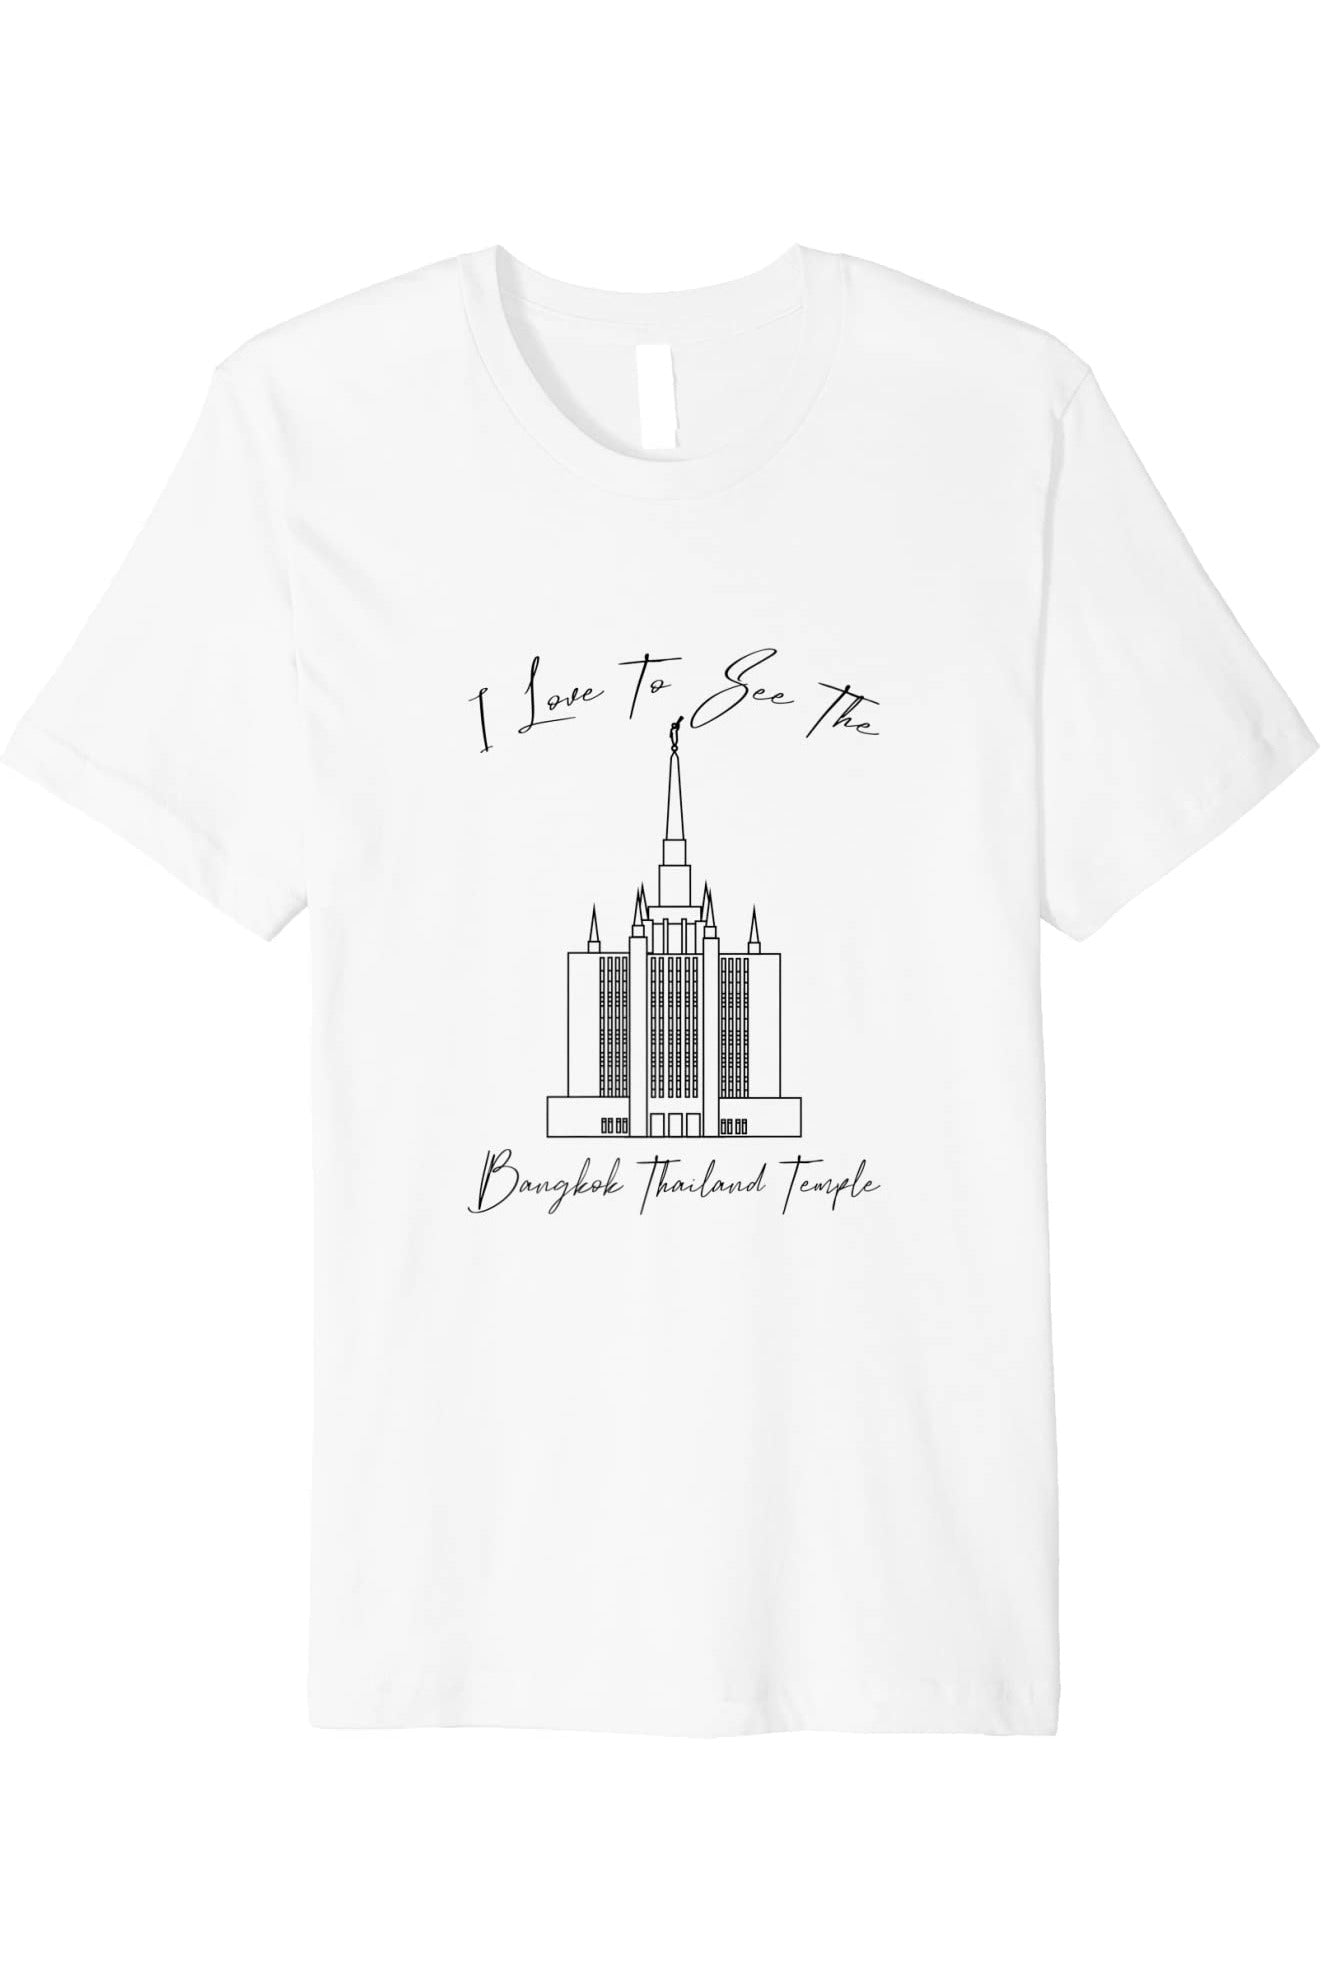 Bangkok Thailand Temple T-Shirt - Premium - Calligraphy Style (English) US